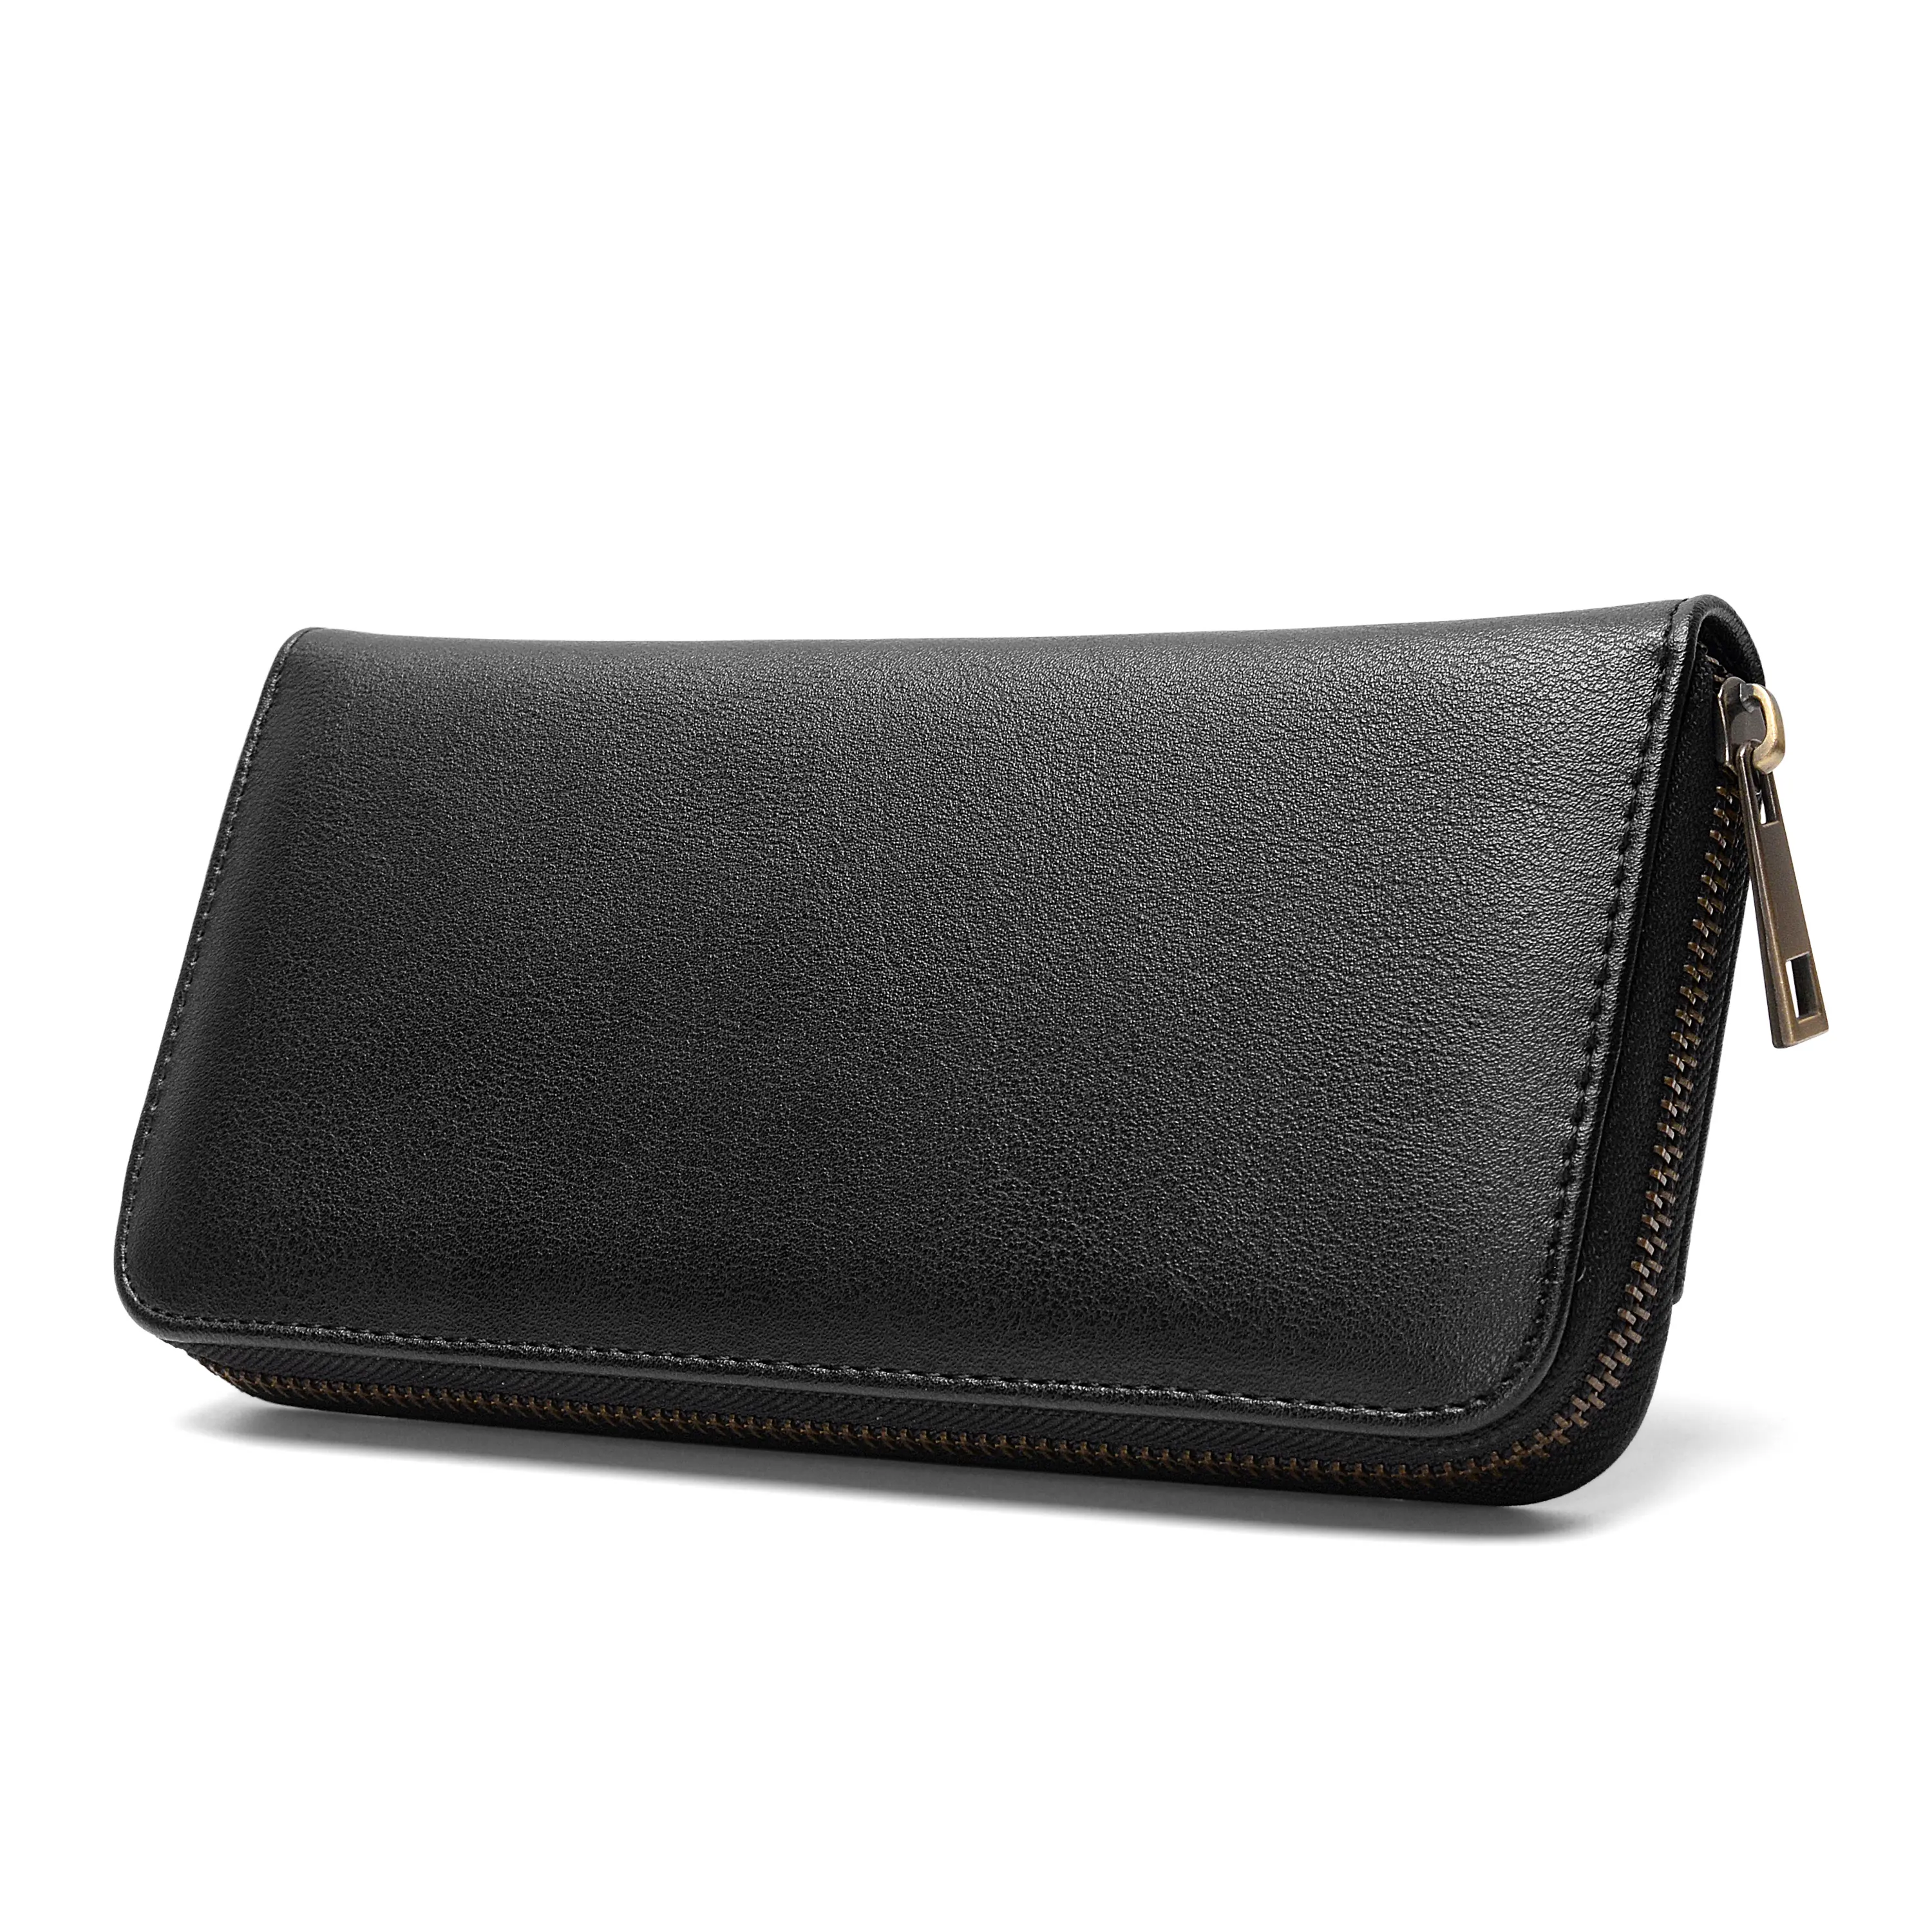 New Luxury copper Zipper Around long Women clutch bag back pocket cash card holder purse phone bags fashion color Envelop wallet